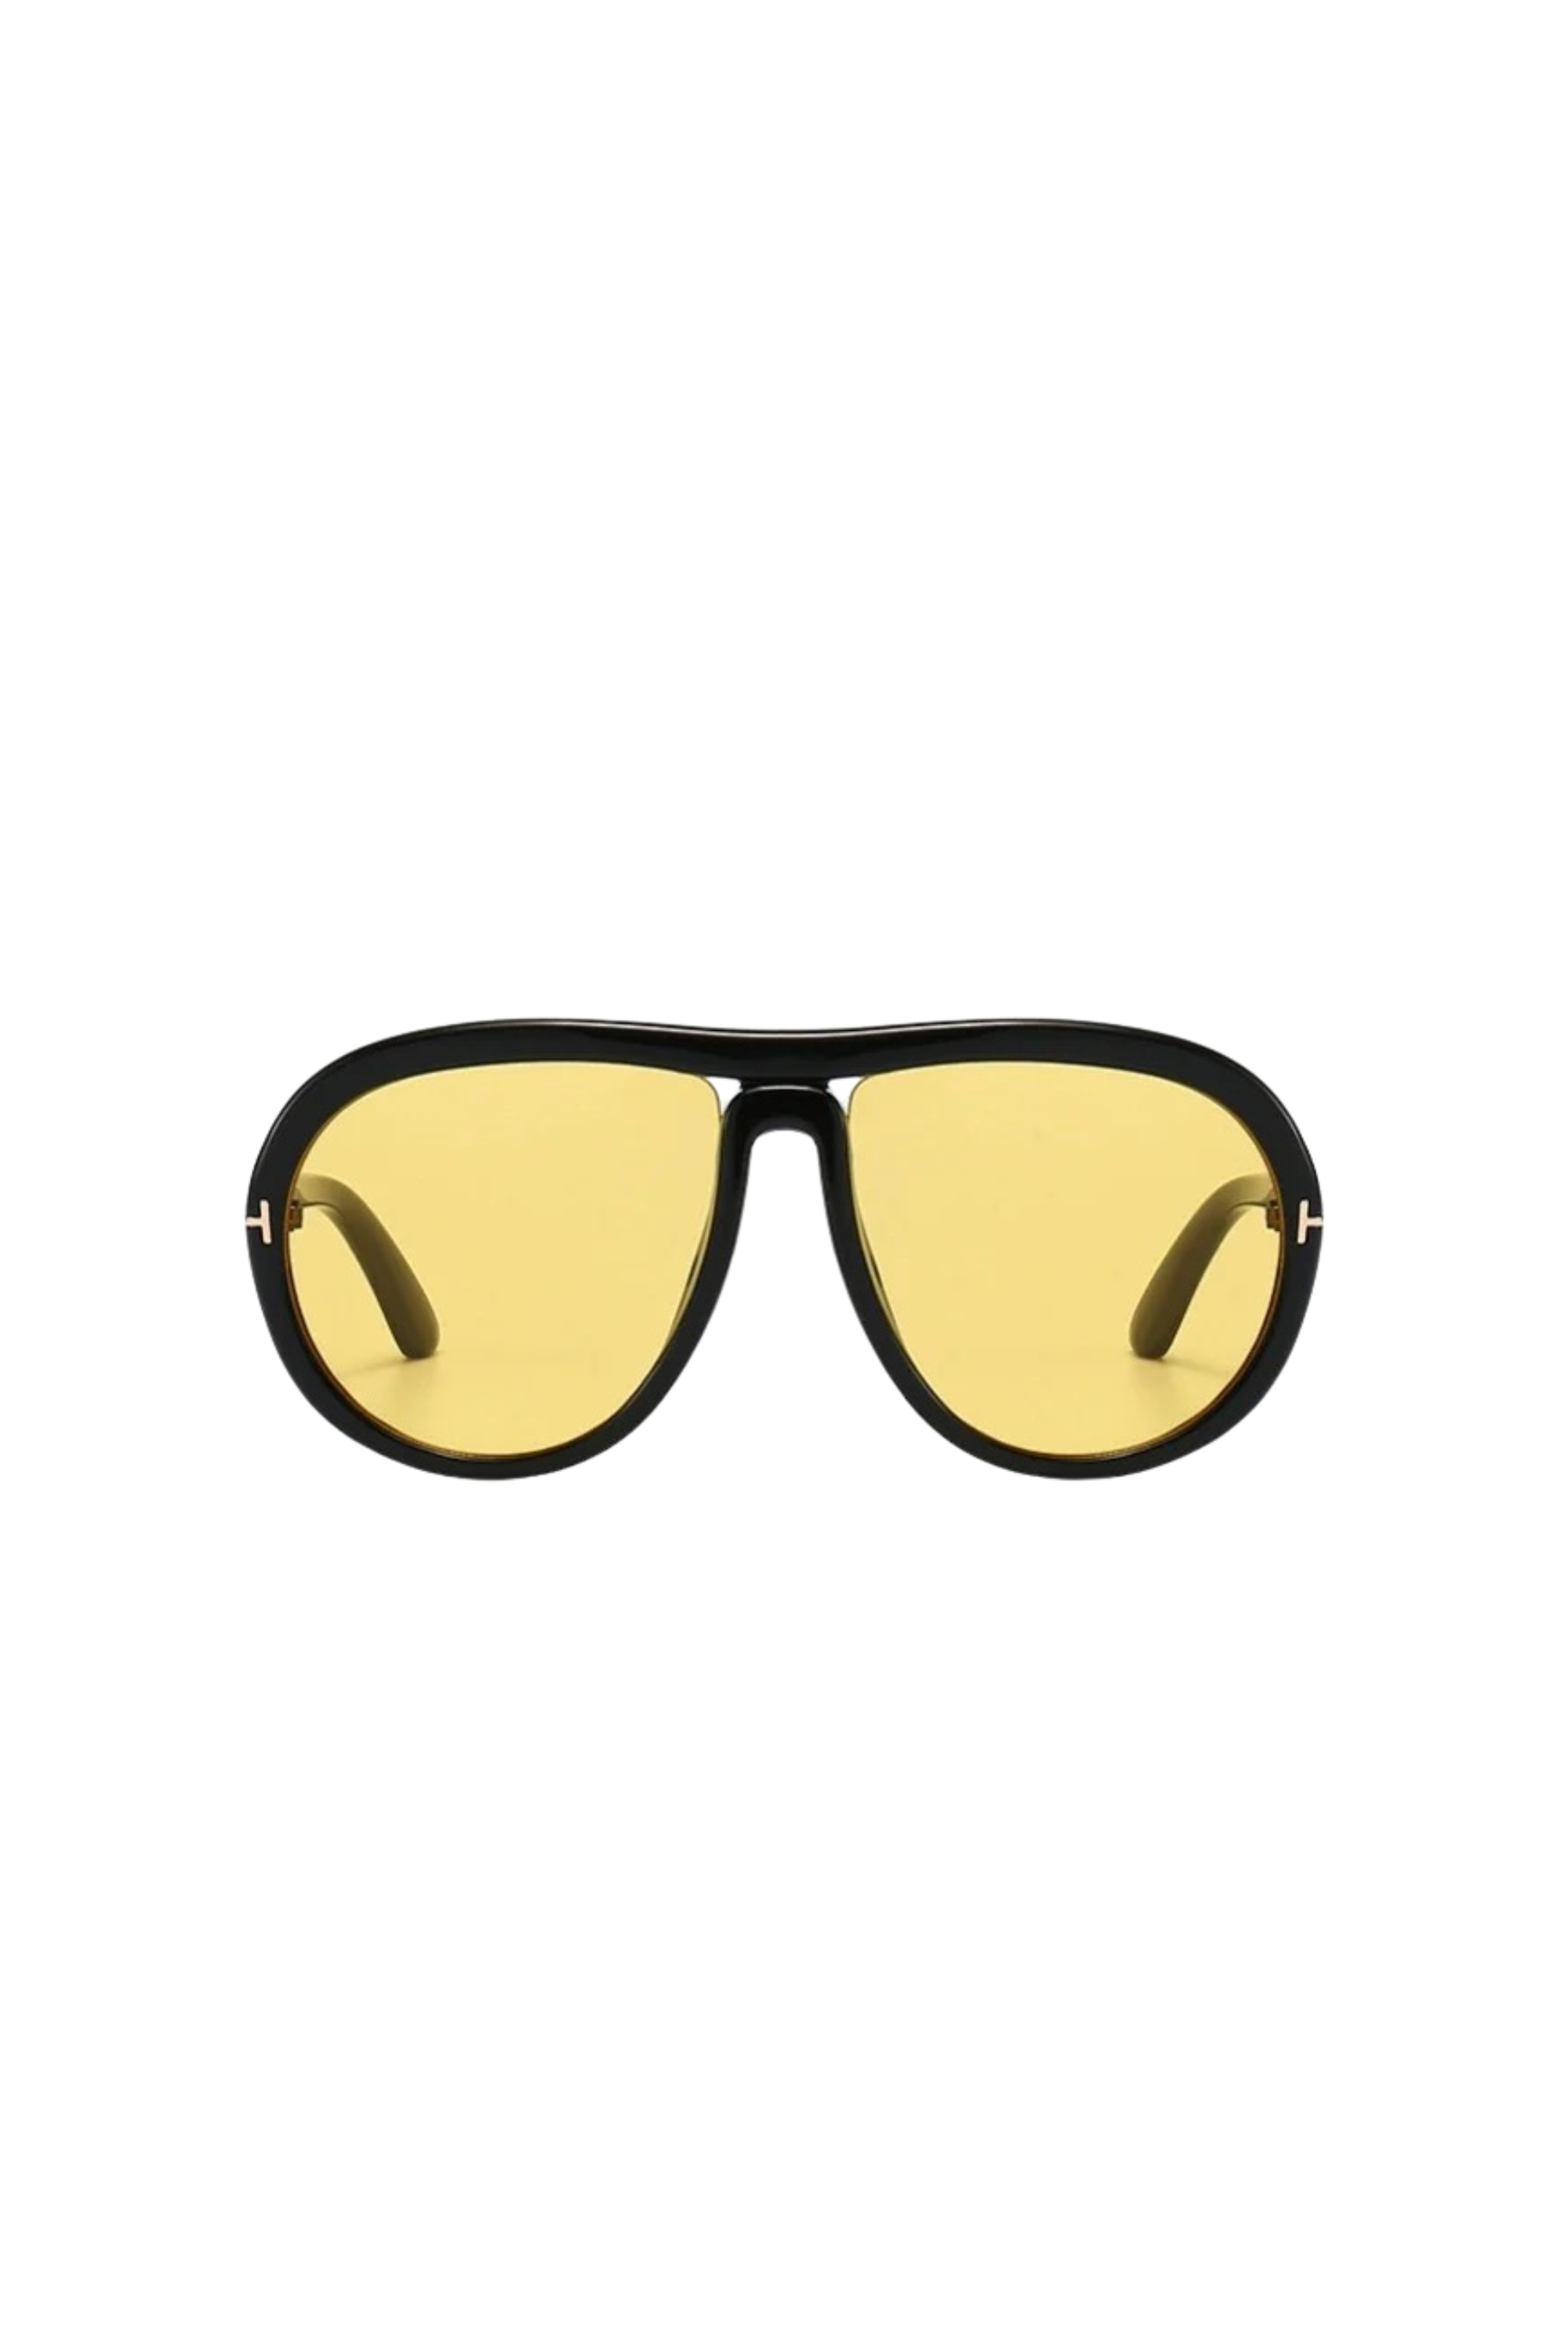 GOLDxTEAL Tab sunglasses.